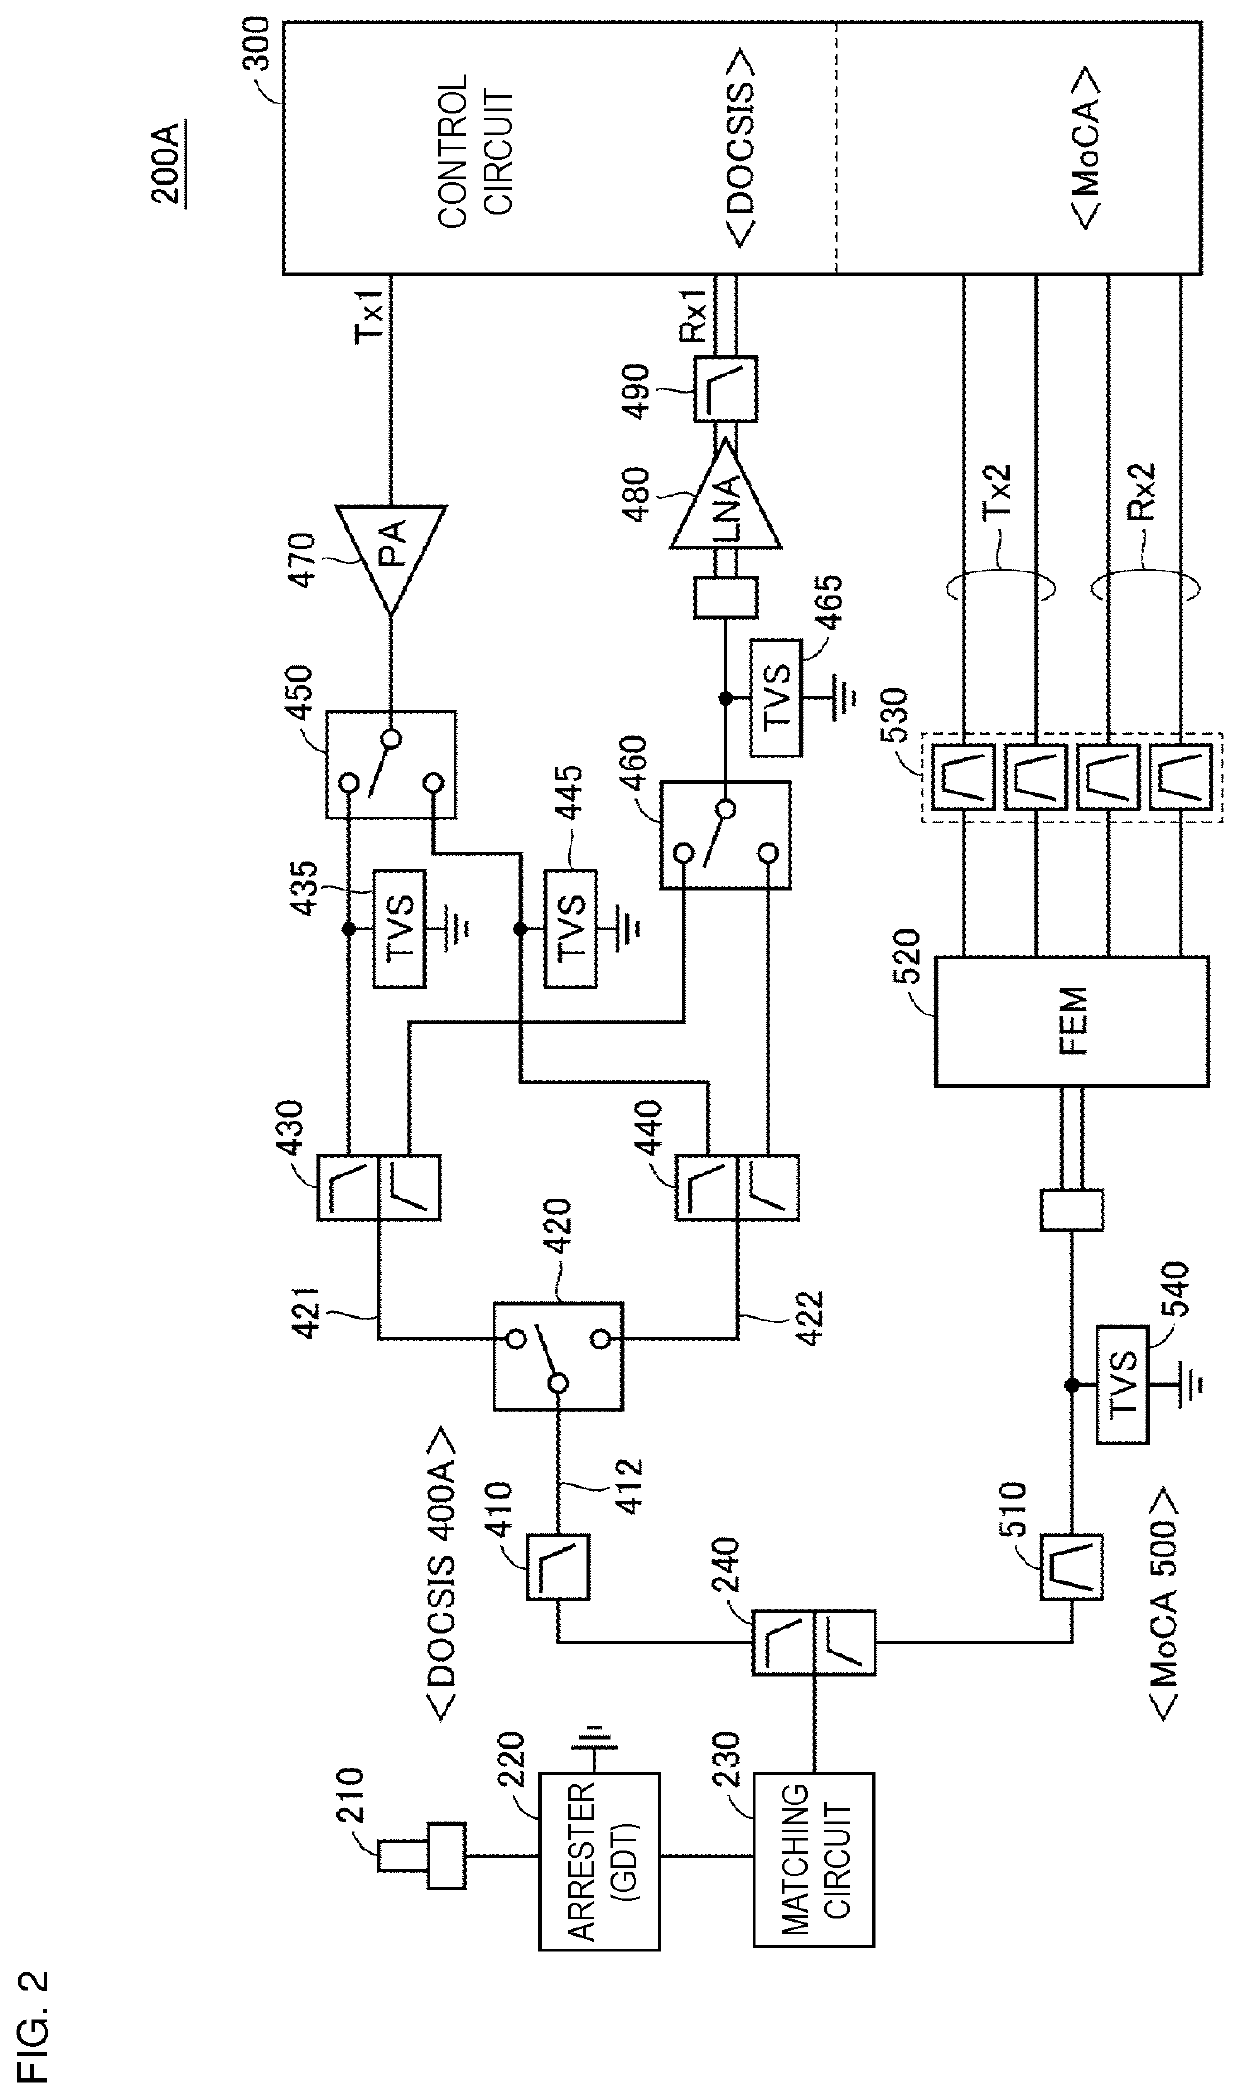 Transmitting and receiving circuit